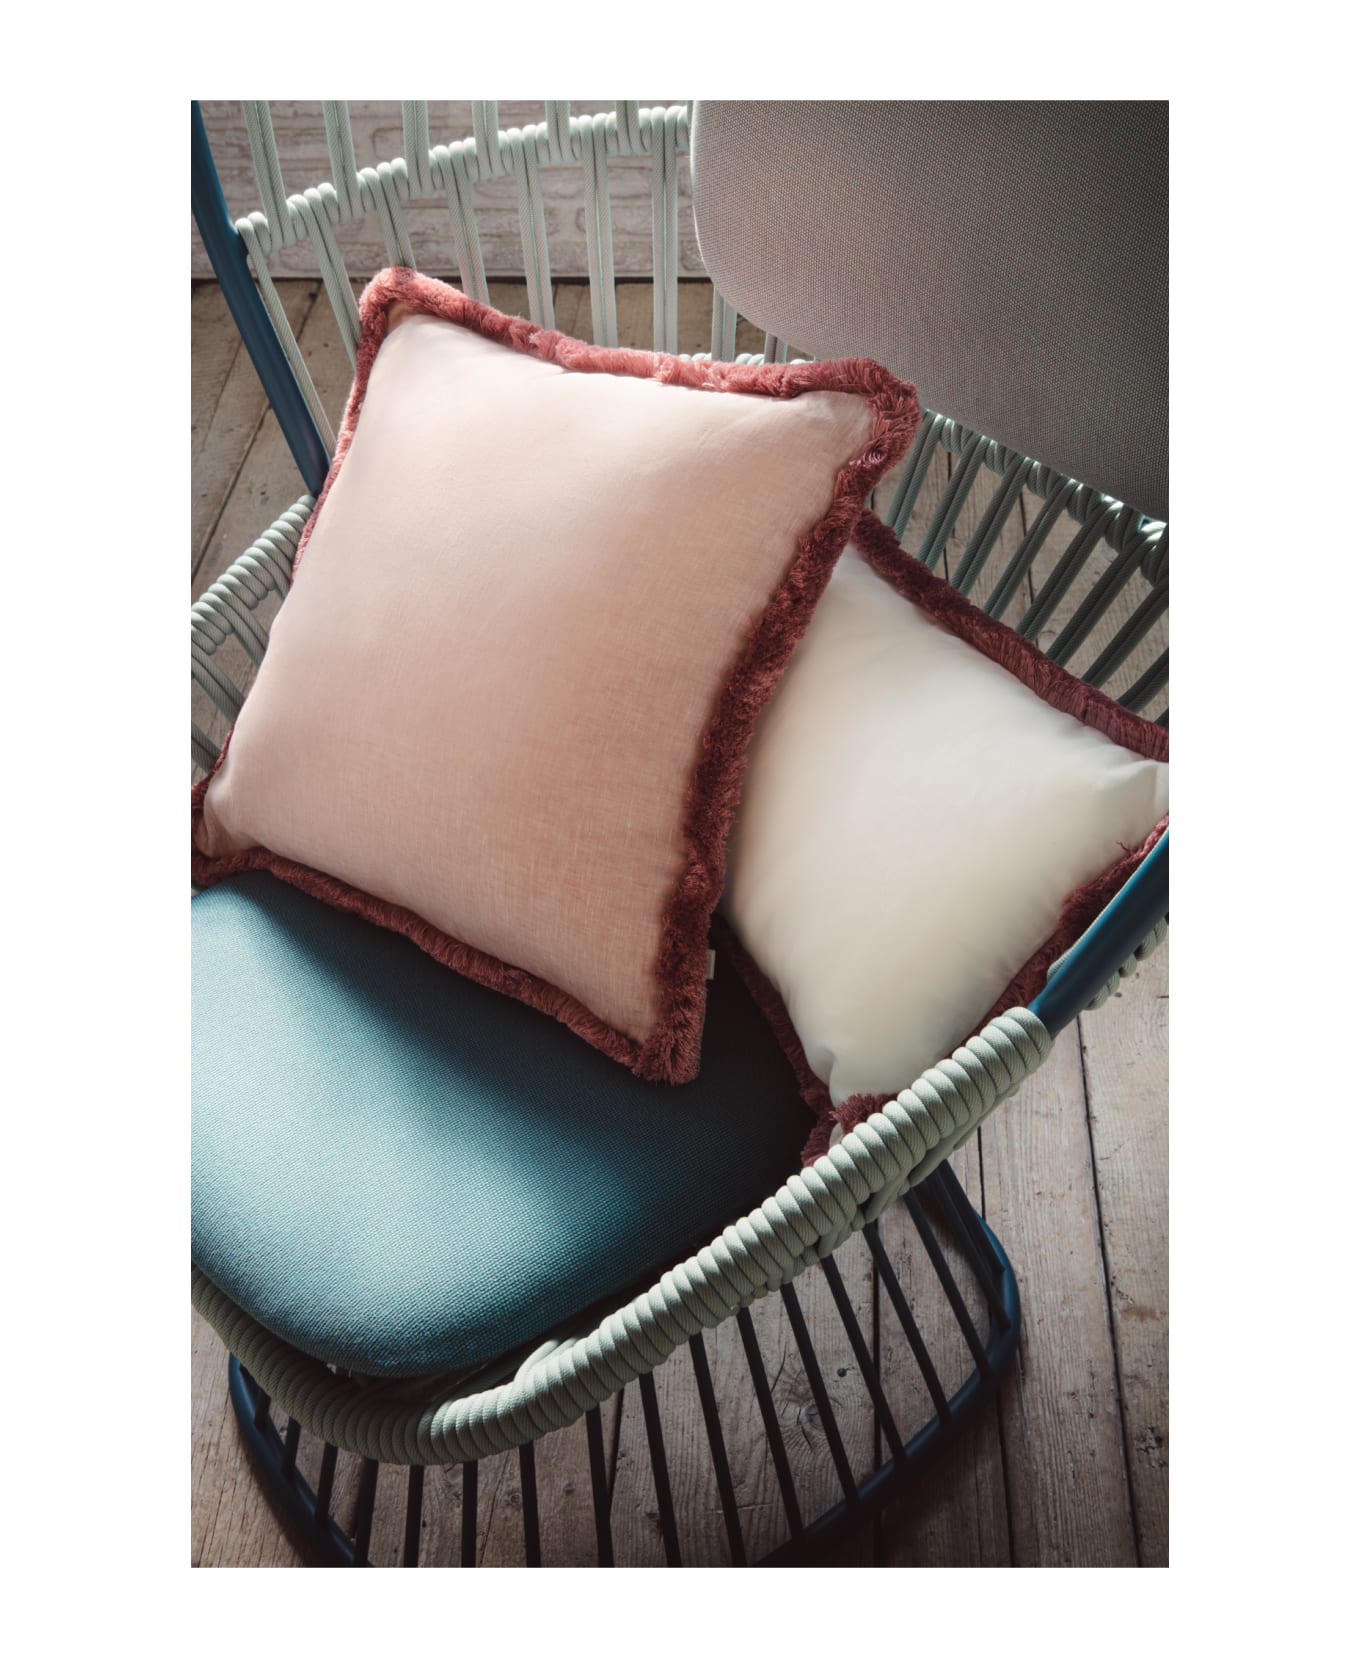 Lo Decor Happy Linen Pillow - Light Pink クッション